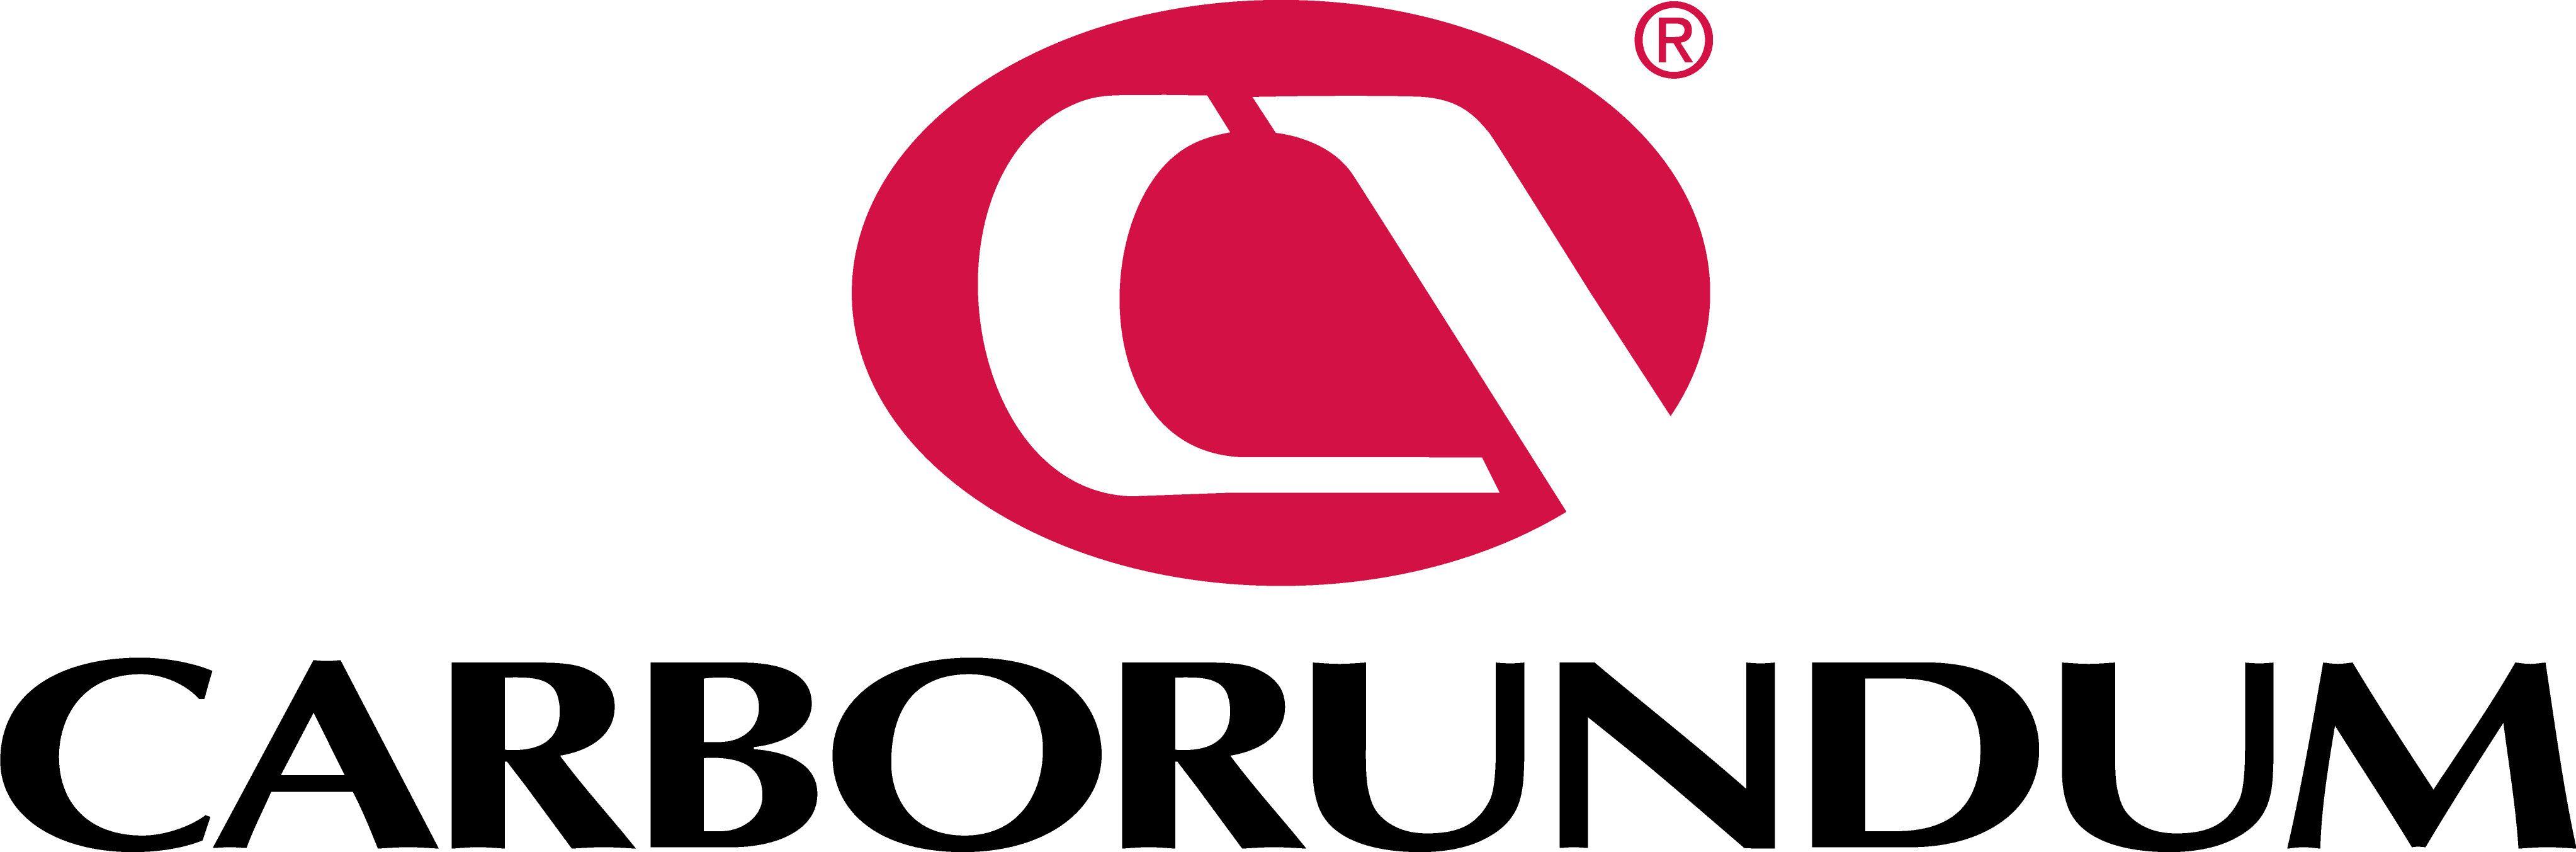 Abrasive Logo - Carborundum Abrasives North America Home Page | Carborundum Abrasives